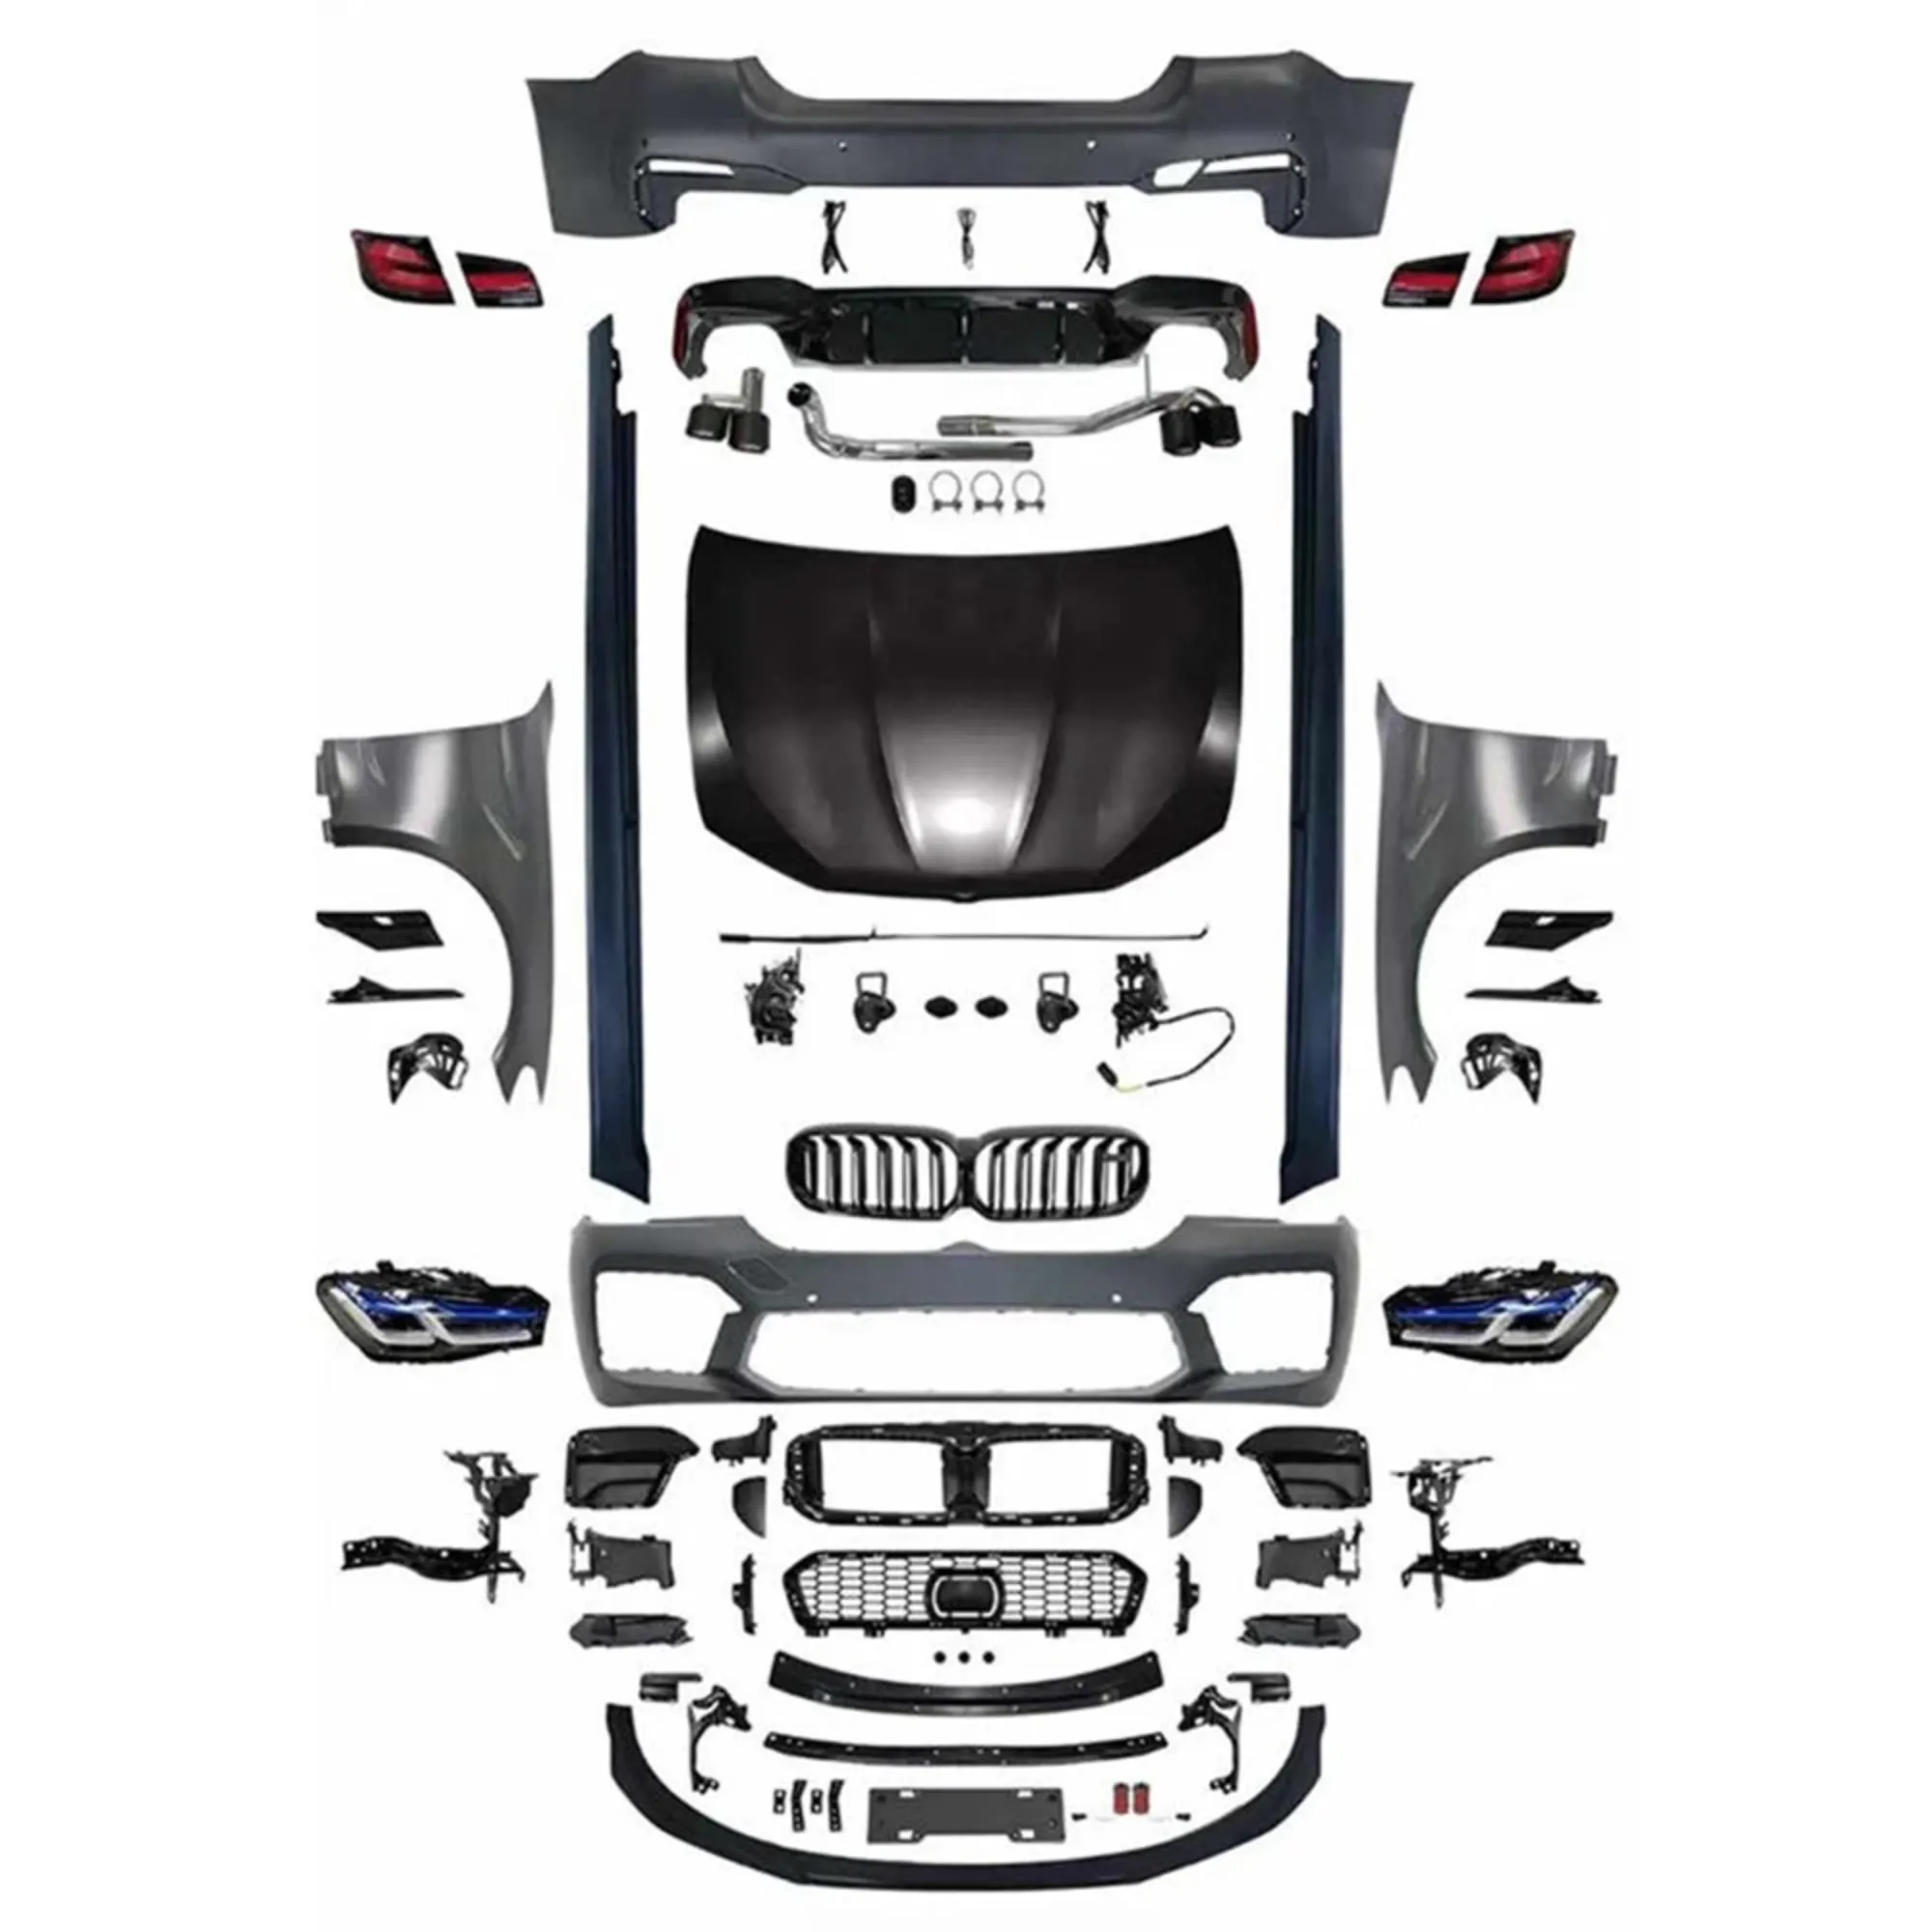 Modified Full Set W212 E63 Body Kit For Mecedes Benz E Class Amg 65 Upgrade Bodykit Facelift Conversion